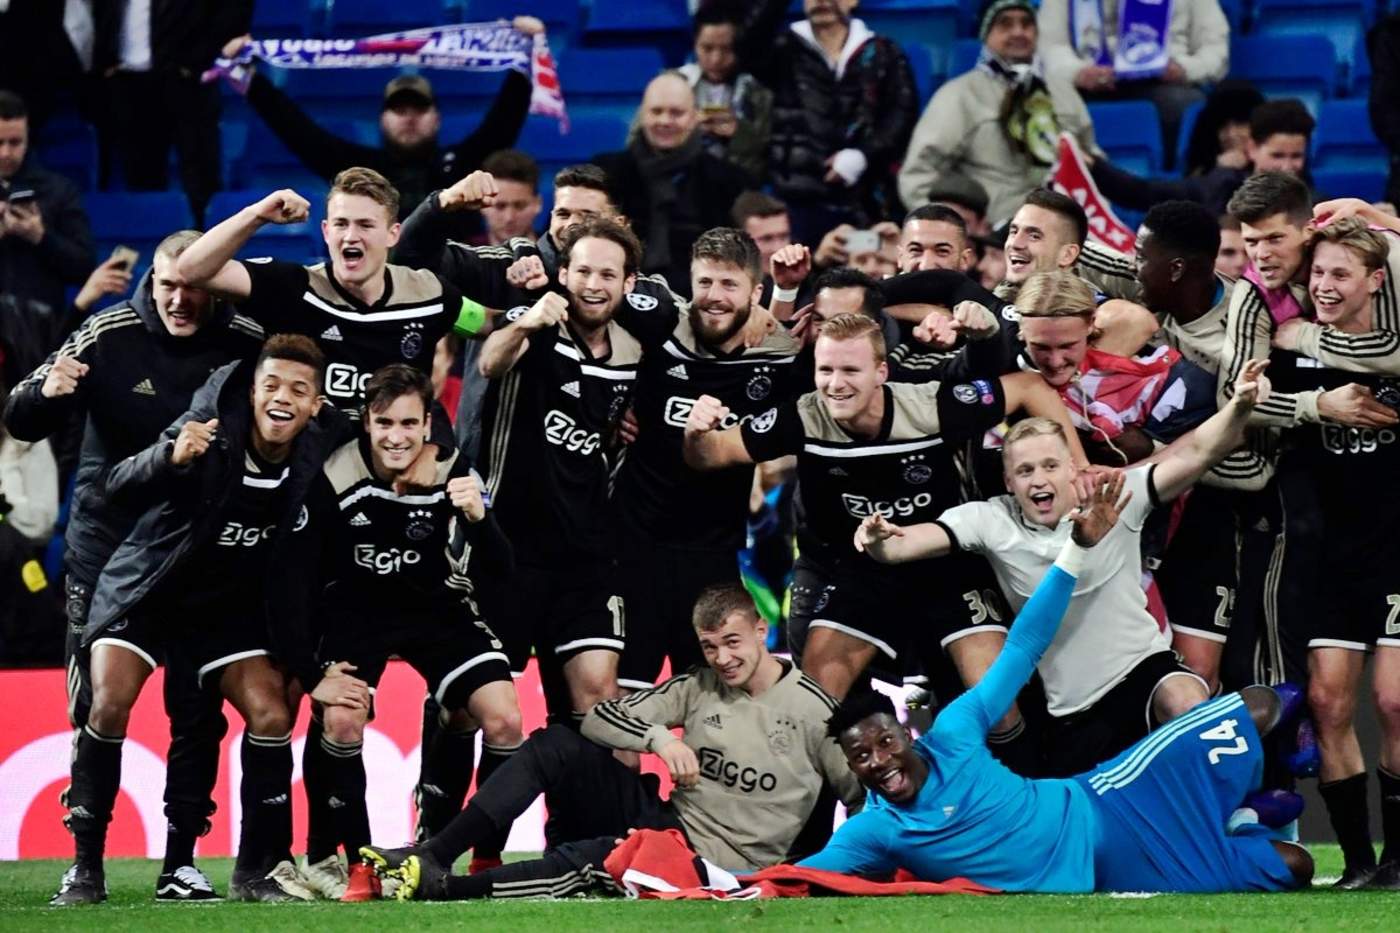 Los jugadores del Ajax festejan tras eliminar al Real Madrid de la Champions League. (Especial)